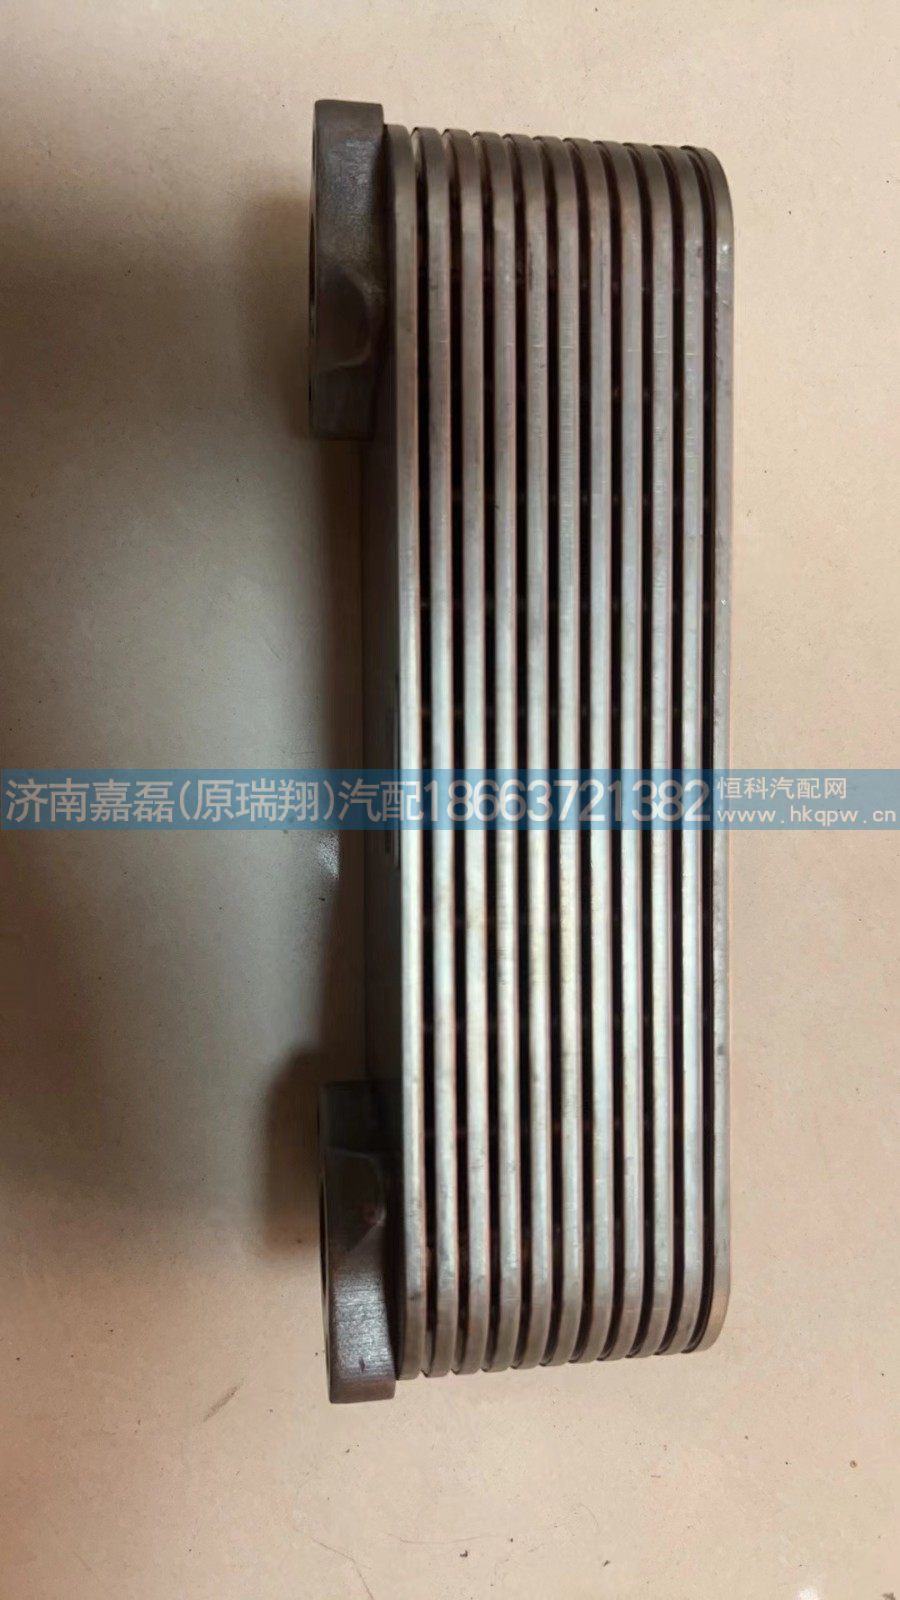 200V05601-0167,机油冷却器芯,济南嘉磊汽车配件有限公司(原济南瑞翔)